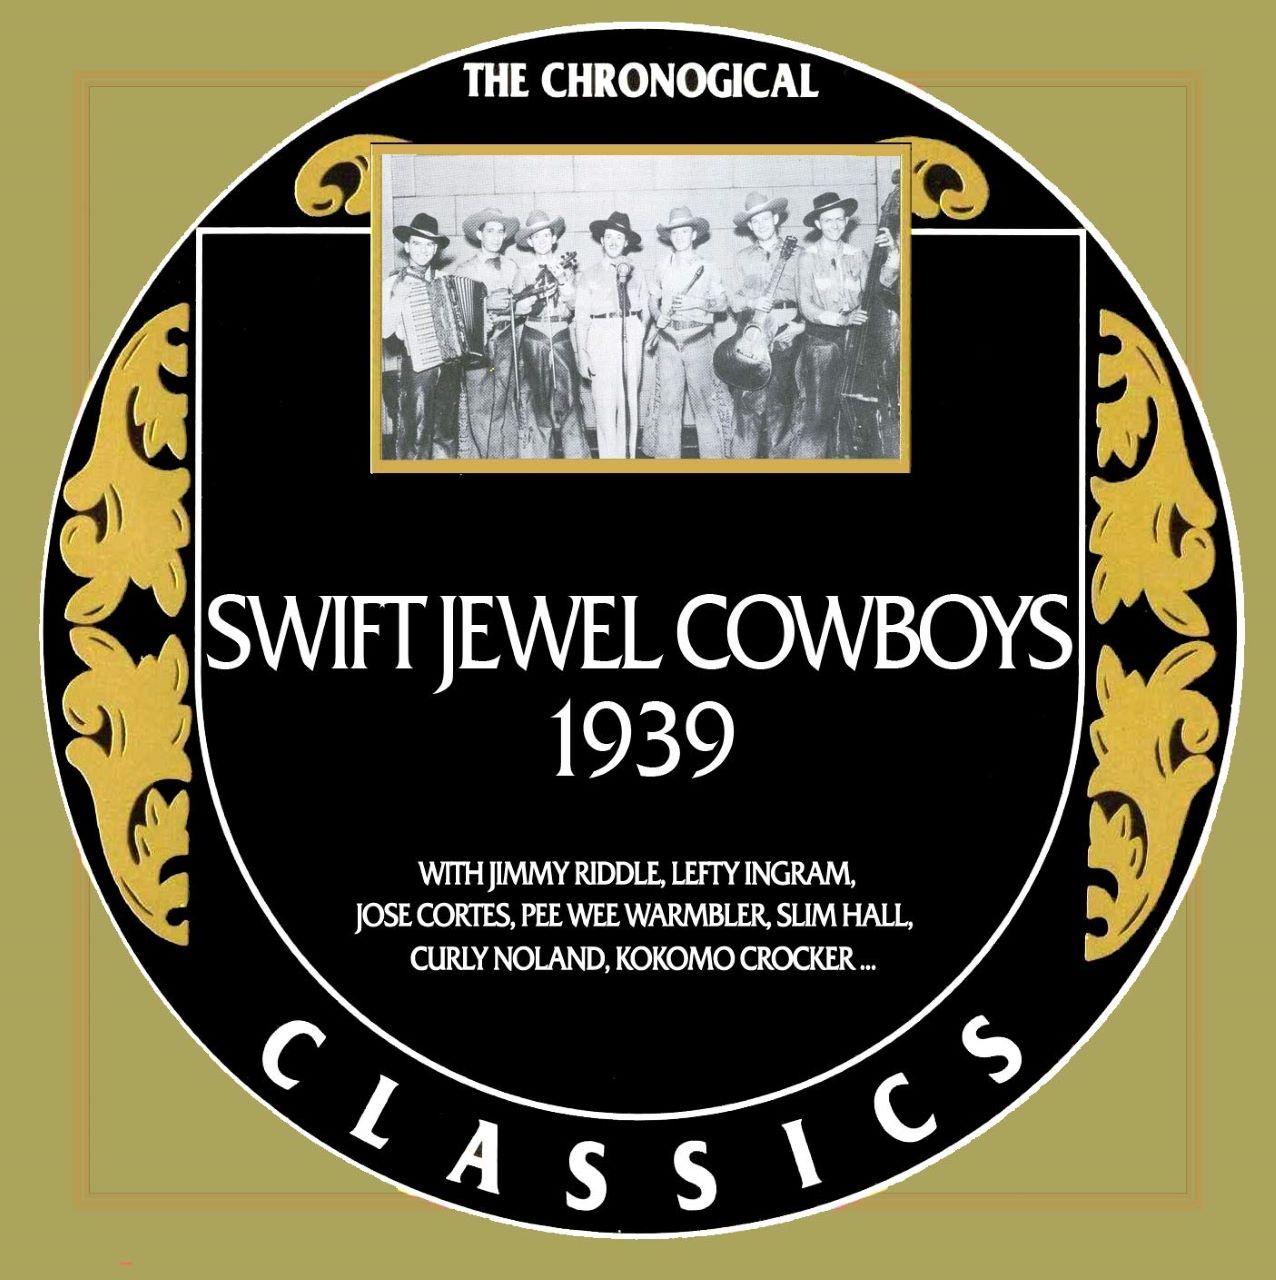 Swift Jewel Cowboys